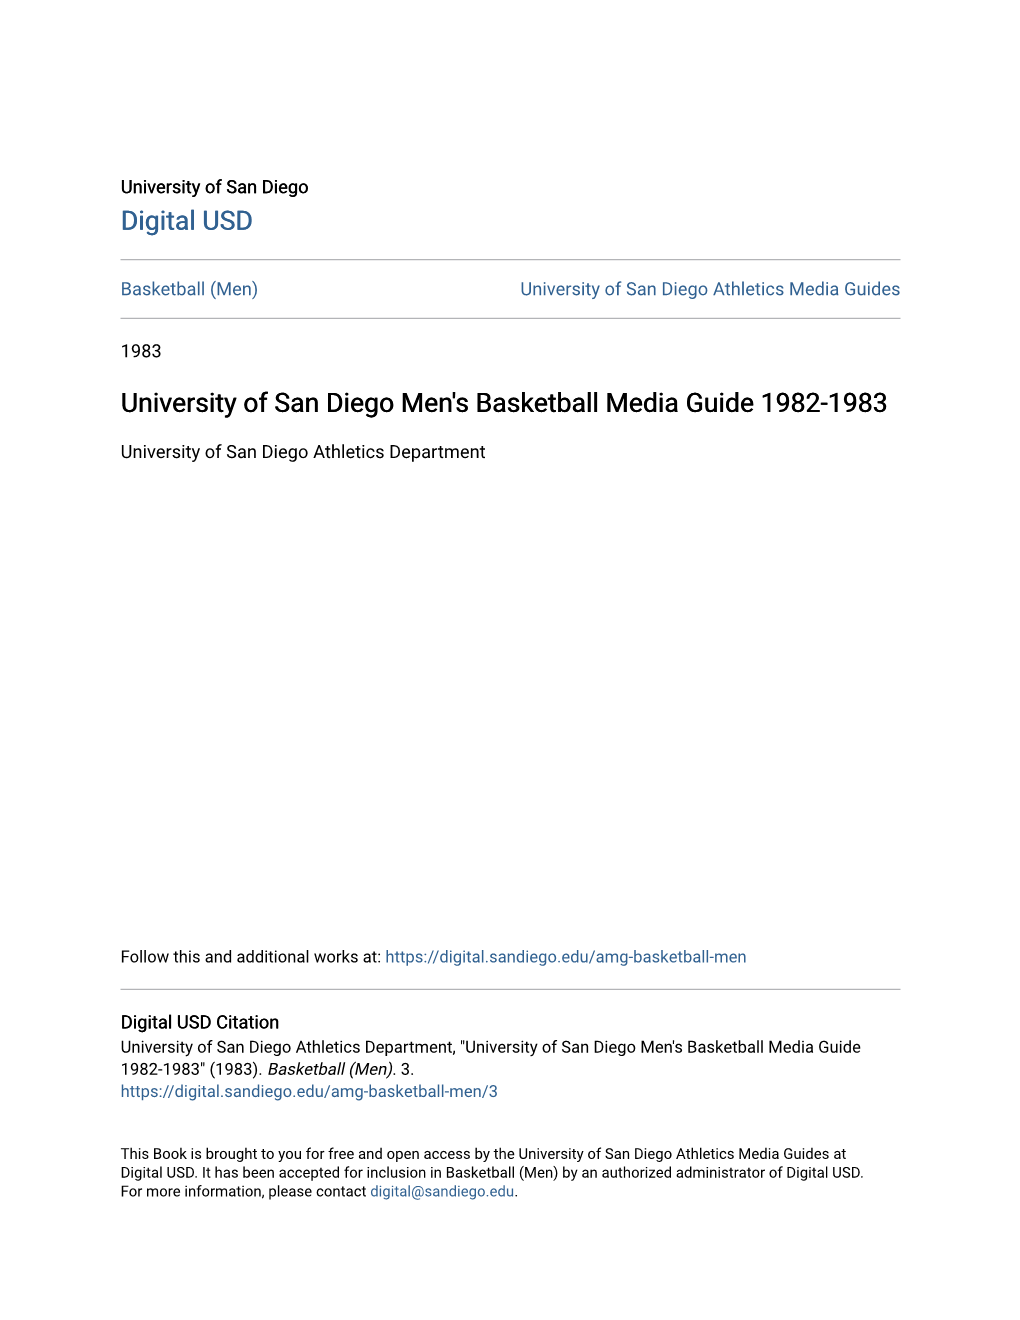 University of San Diego Men's Basketball Media Guide 1982-1983